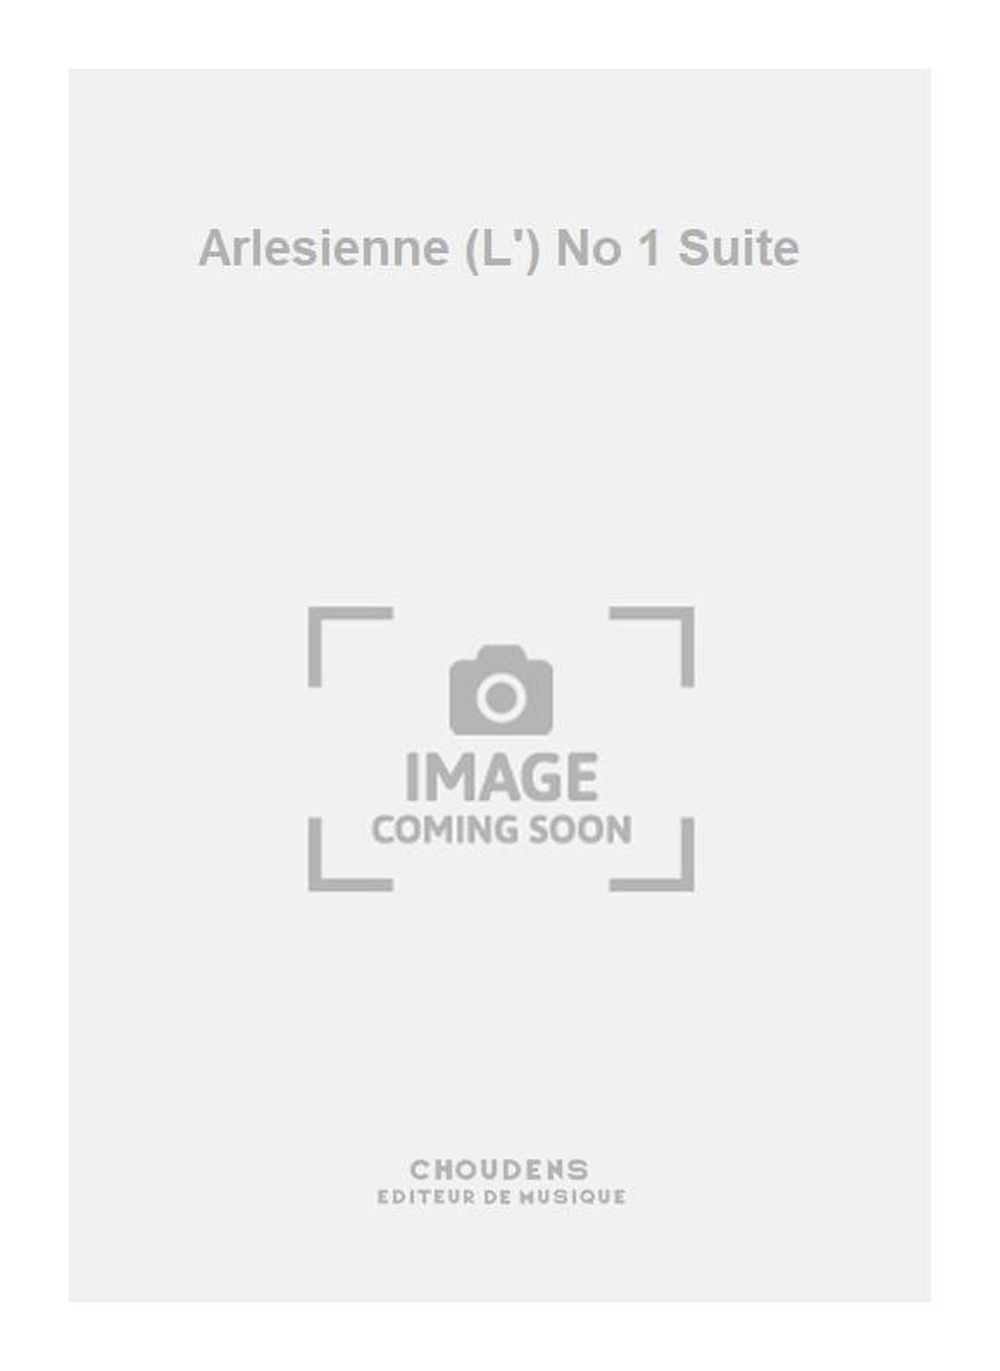 Georges Bizet: Arlesienne (L') No 1 Suite